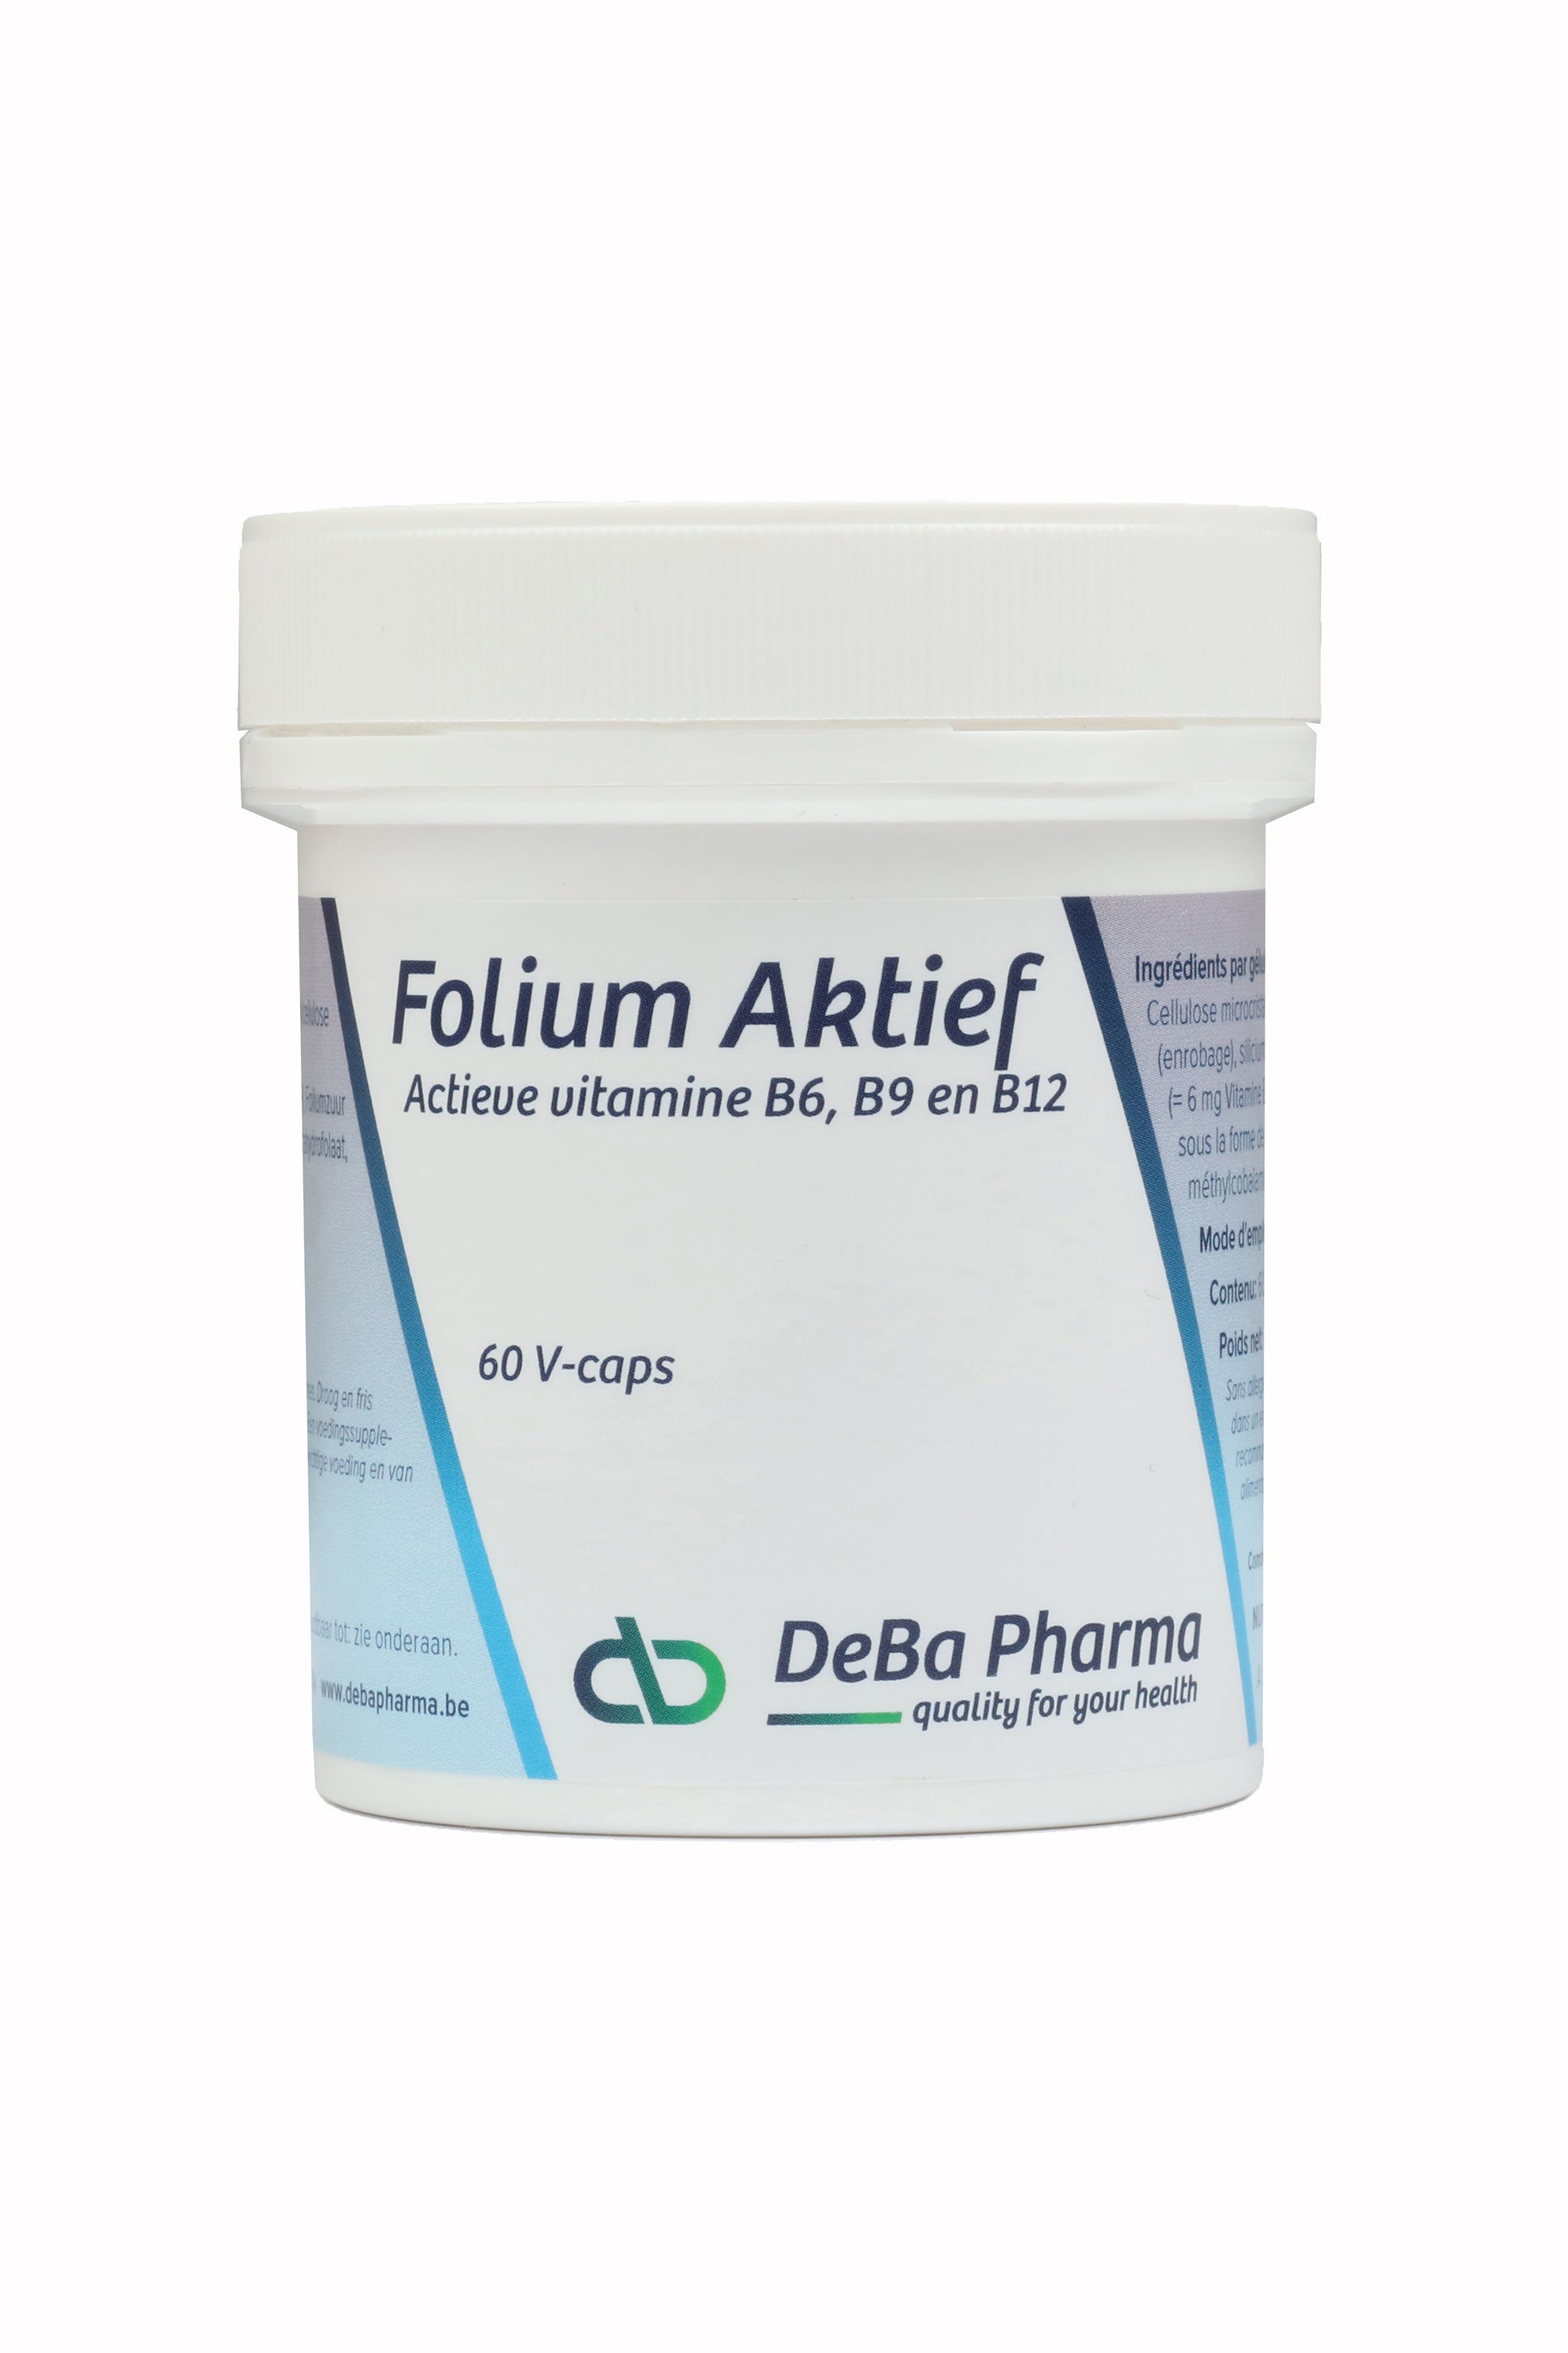 DeBa Pharma - Folium Aktief